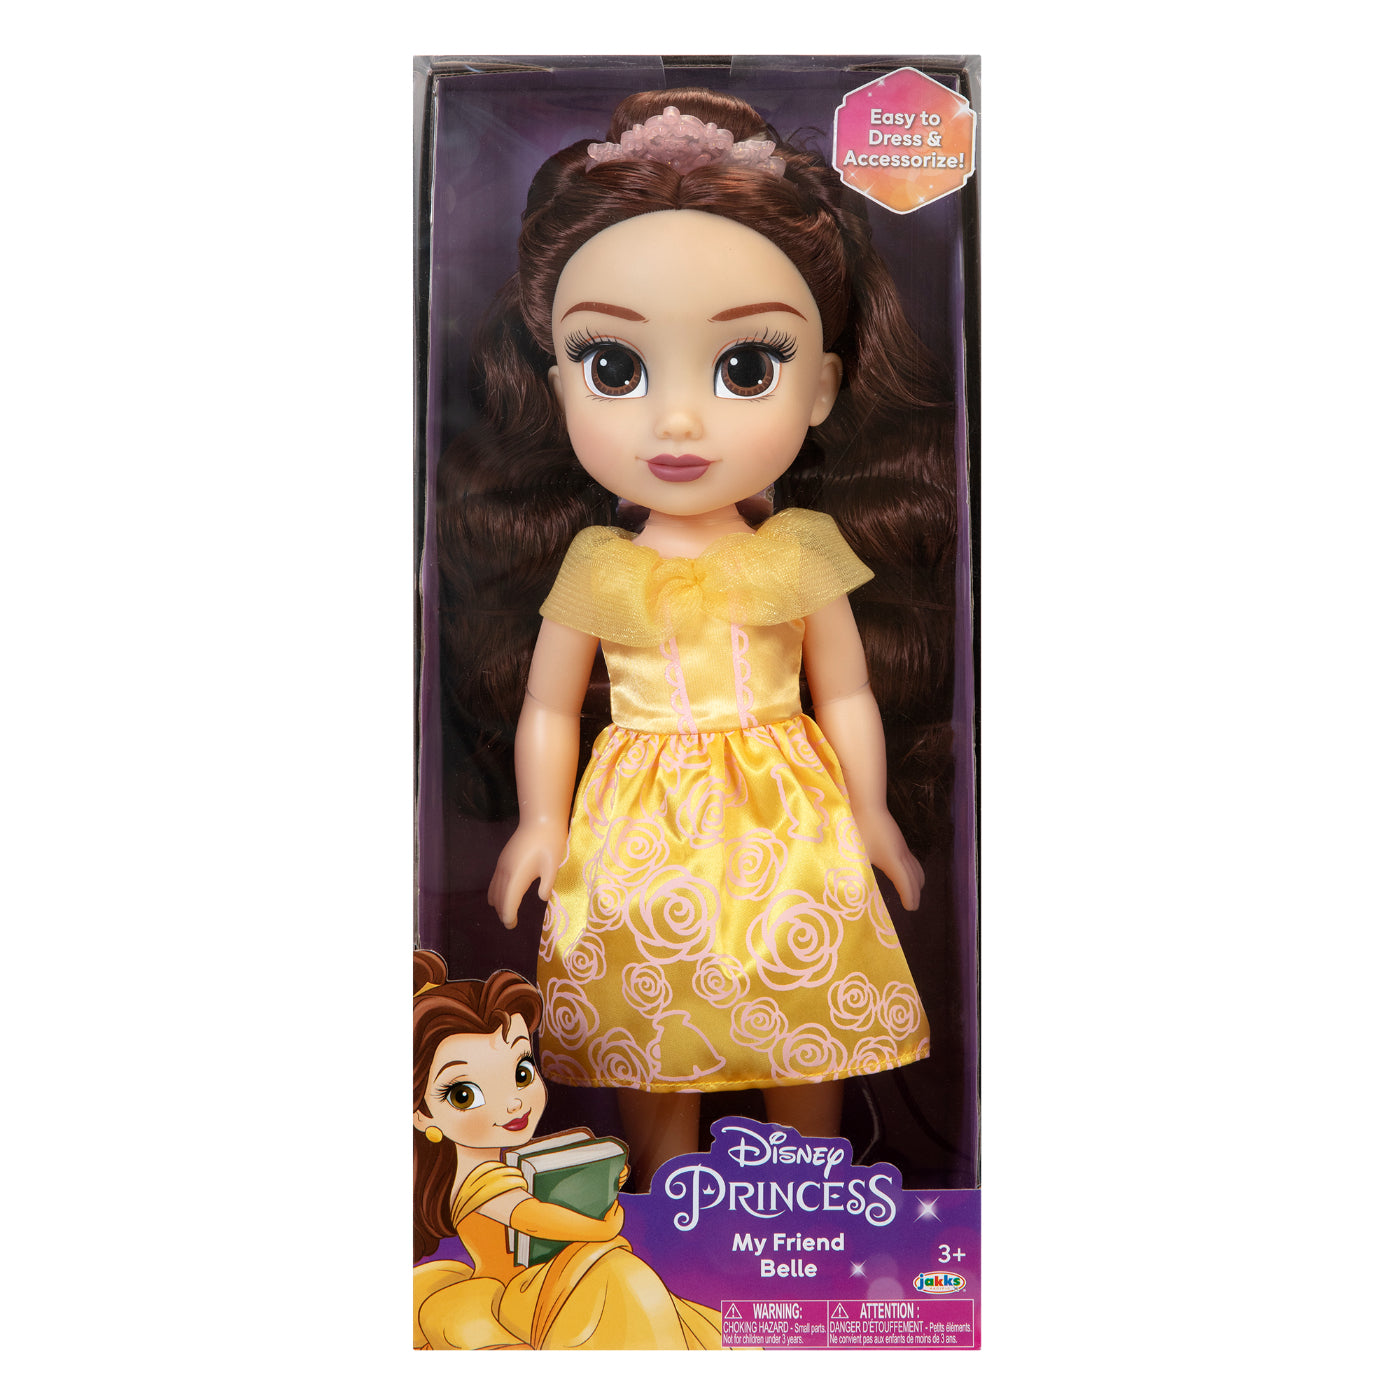 Muñeca Mini Toddler Disney Princesas - KIDZ juguetes